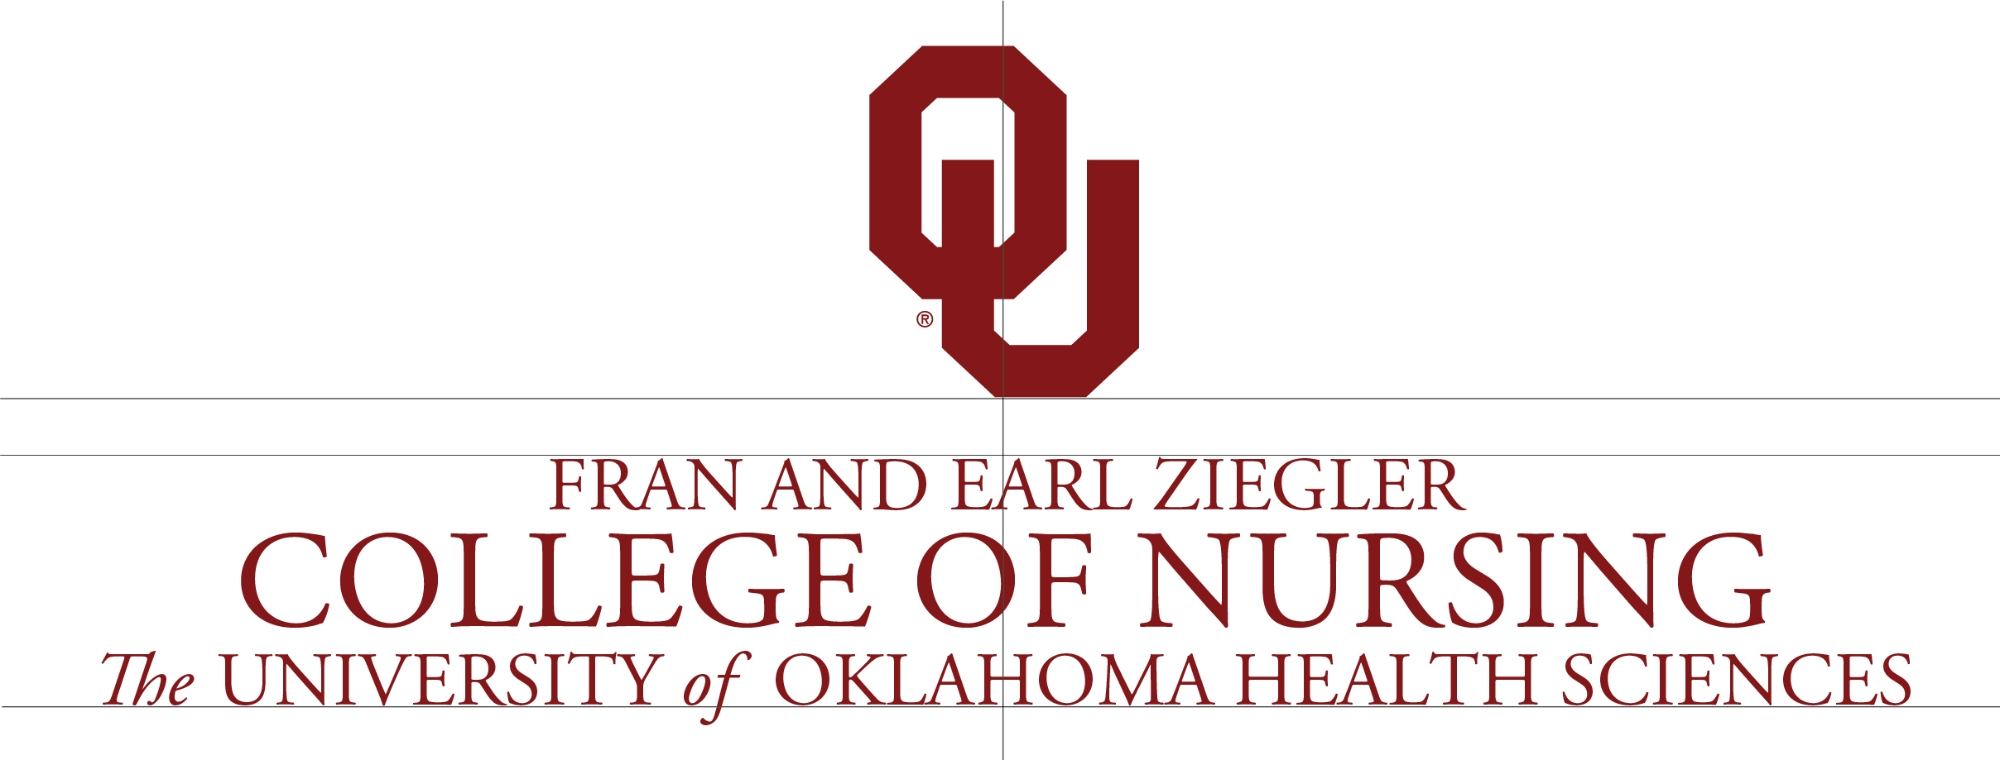 Interlocking OU, Fran and Earl Ziegler College of Nursing, The University of Oklahoma Health Sciences wordmark, three-line example.